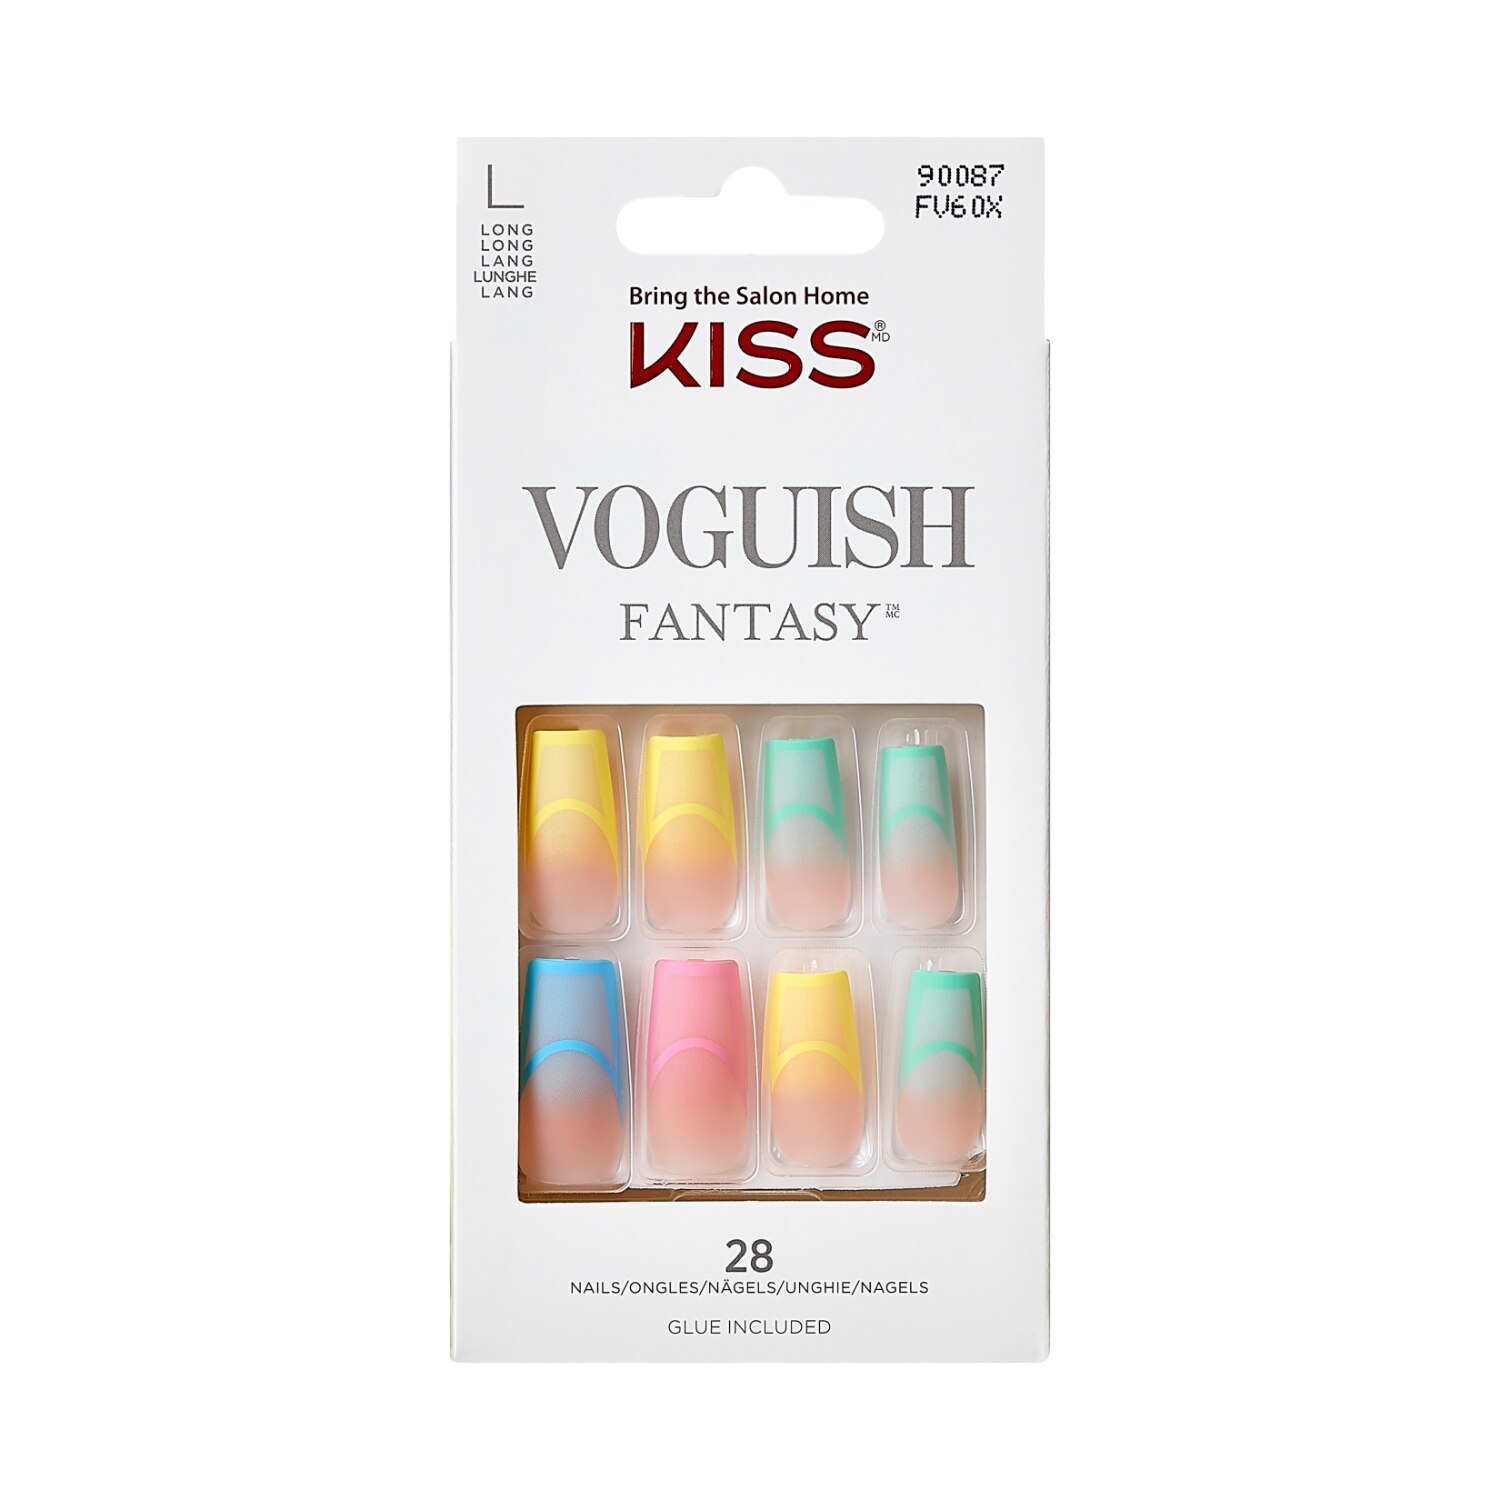 KISS Voguish Fantasy Long Square Press-On Nails, Summertime, Multi-Pastel, 31 Ct. , CVS